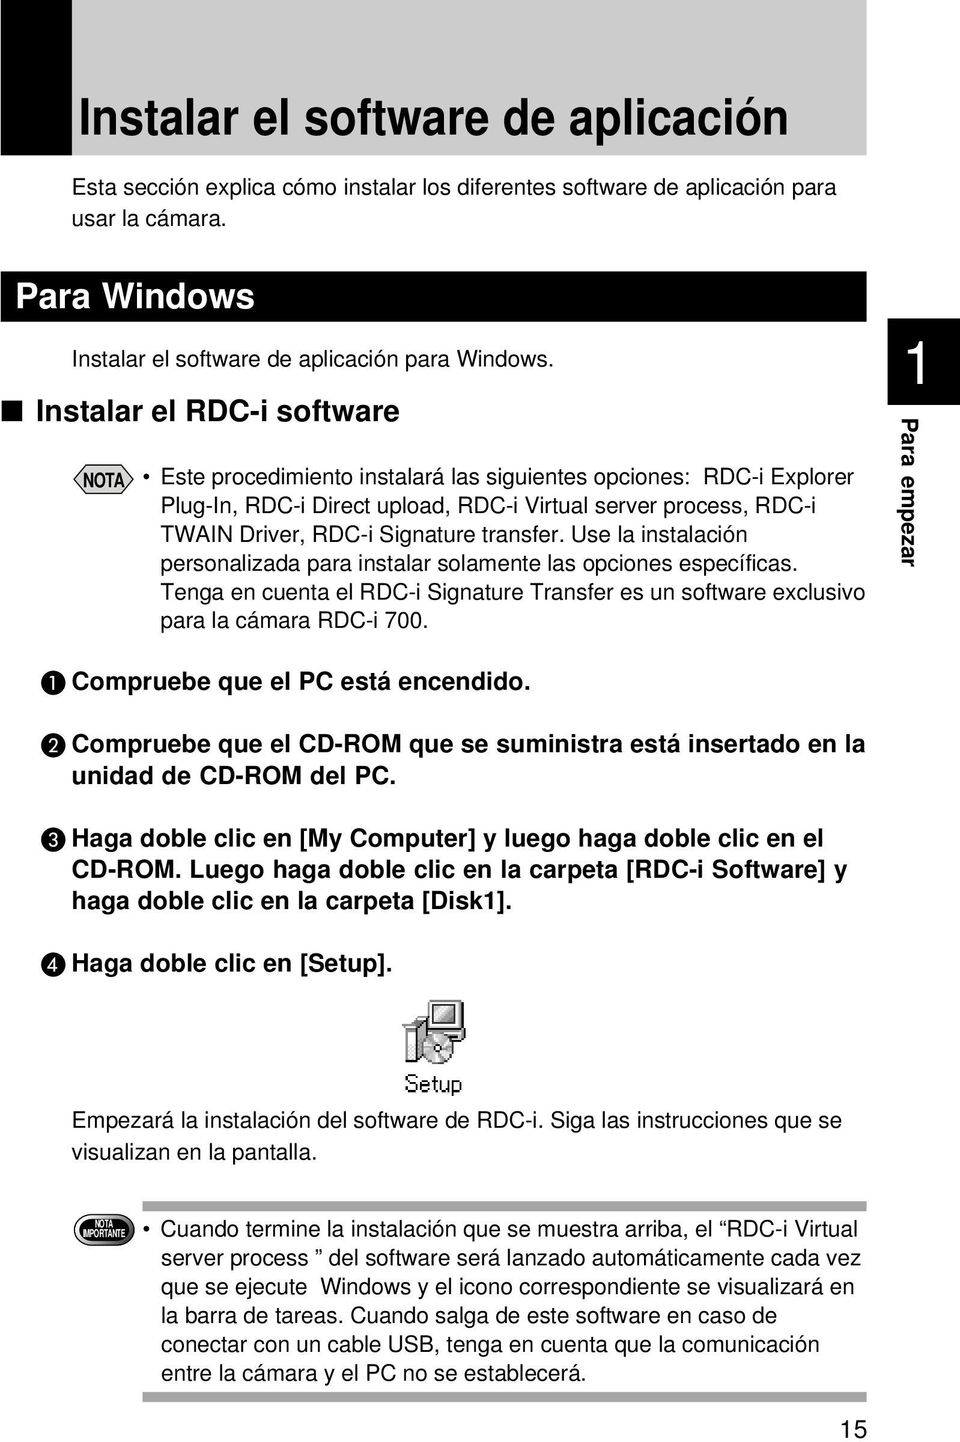 Instalar el RDC-i software 1 Este procedimiento instalará las siguientes opciones: RDC-i Explorer Plug-In, RDC-i Direct upload, RDC-i Virtual server process, RDC-i TWAIN Driver, RDC-i Signature